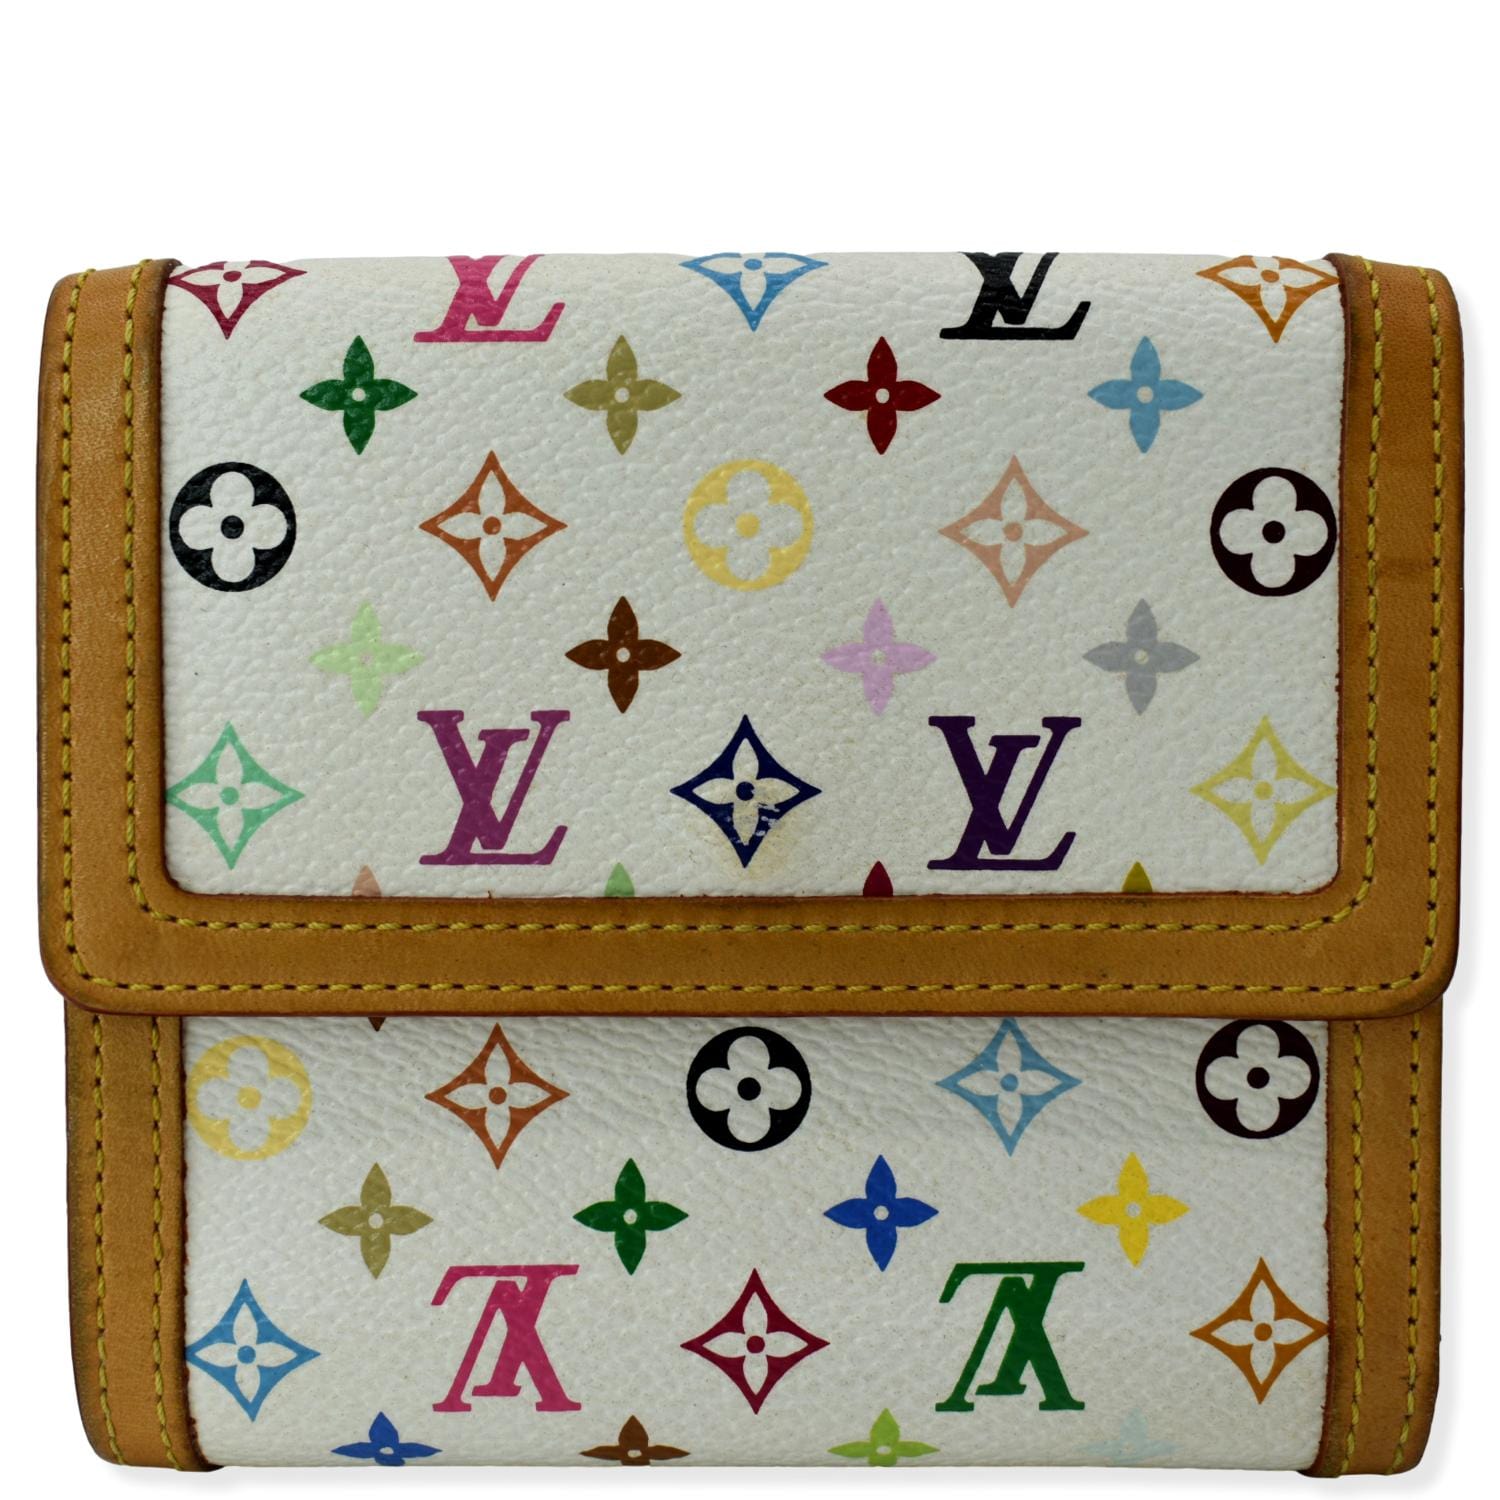 Louis Vuitton white monogrammed new wallet